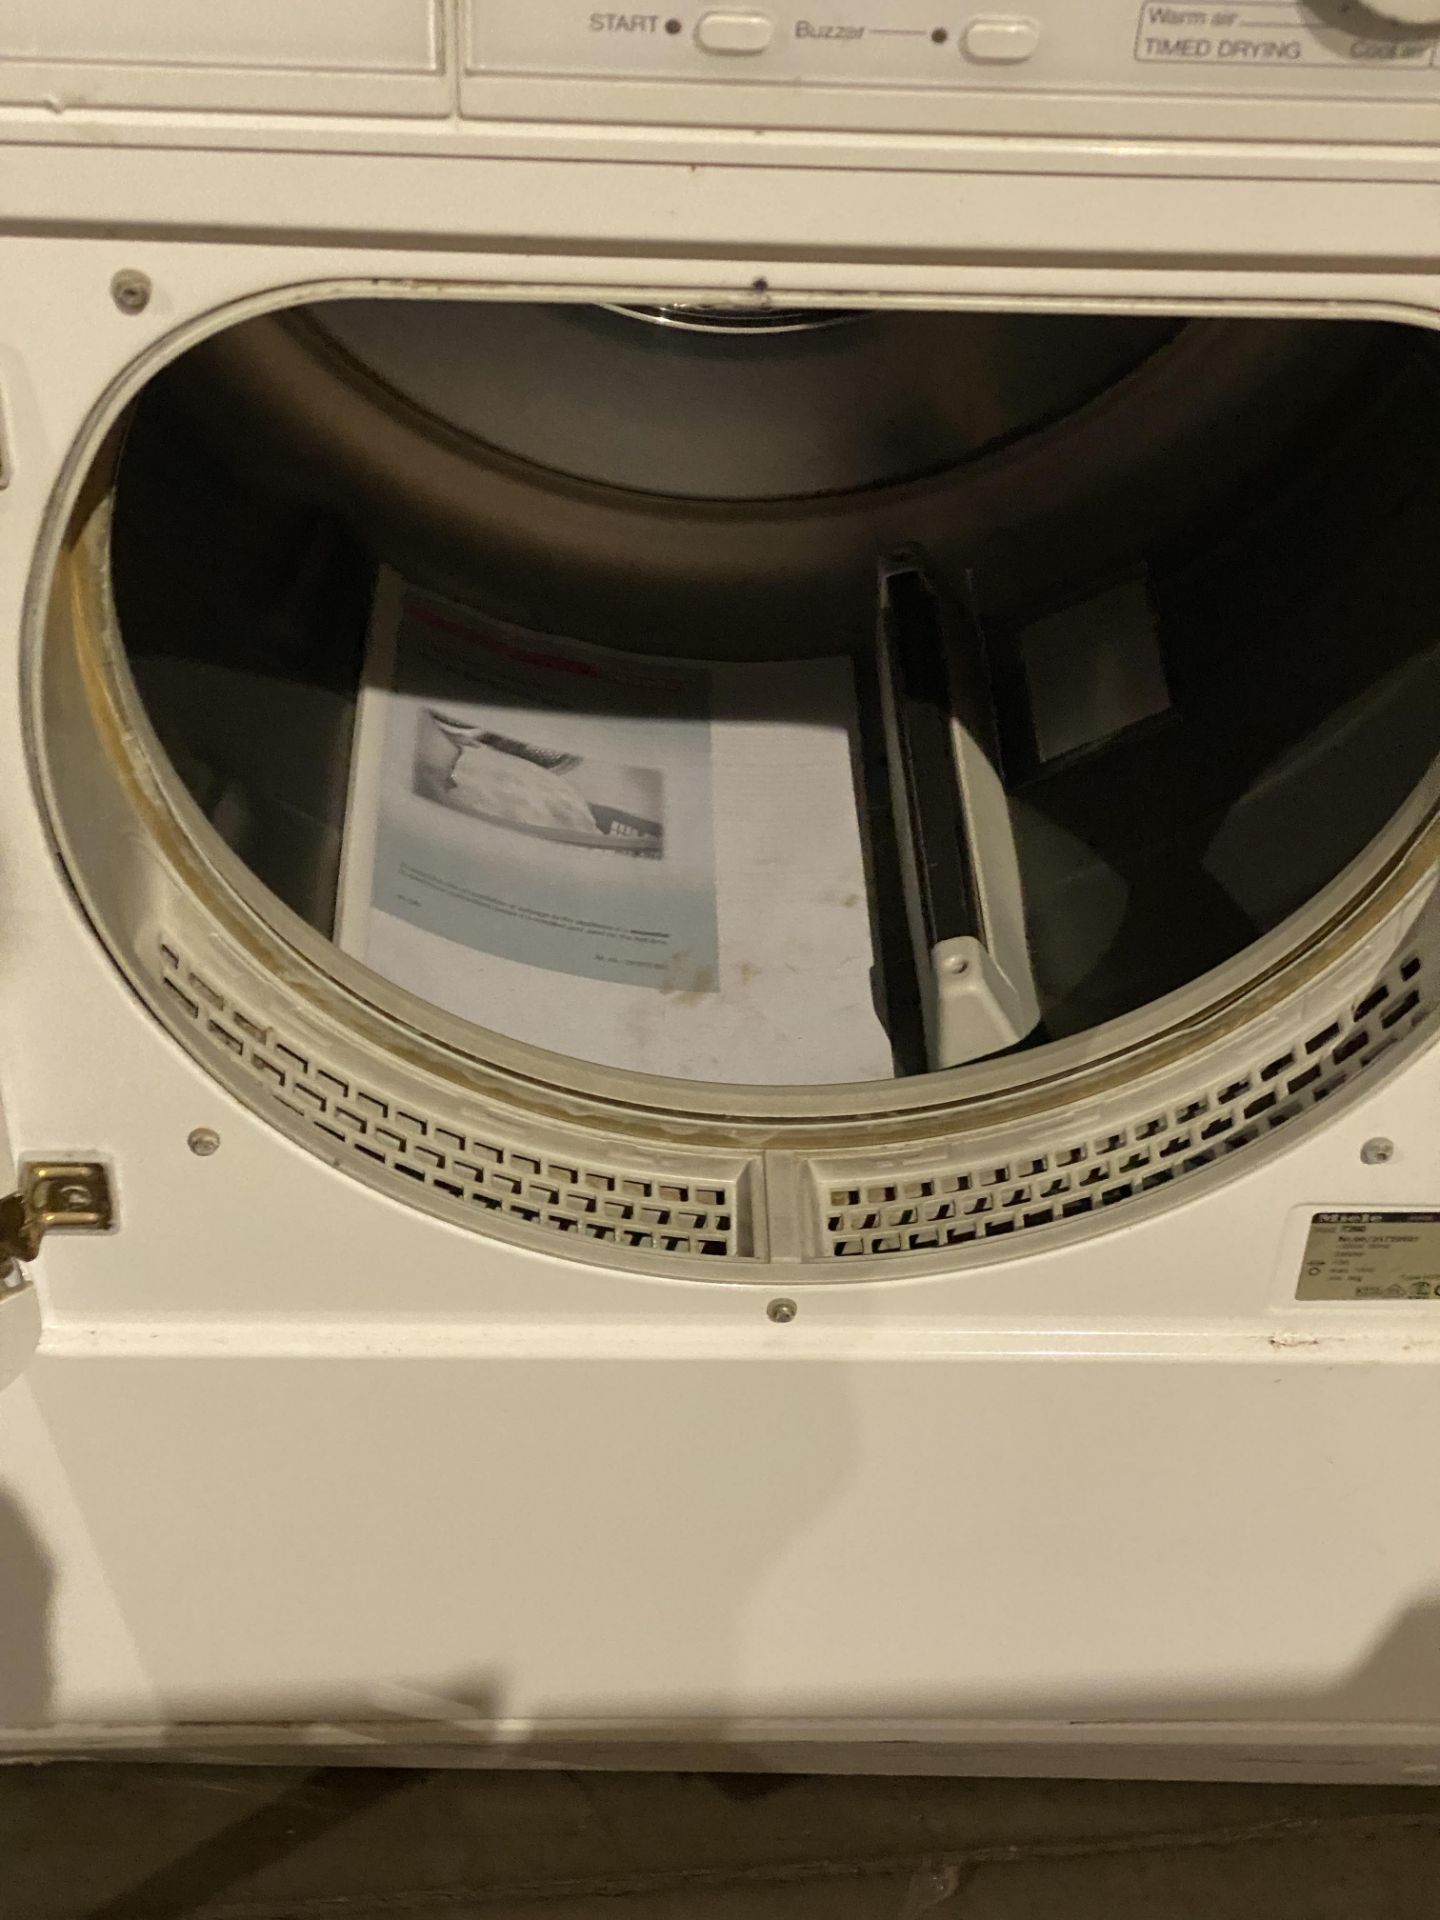 Miele T260 Novotronic tumble dryer - (Saleroom Location MA02) - Image 2 of 4